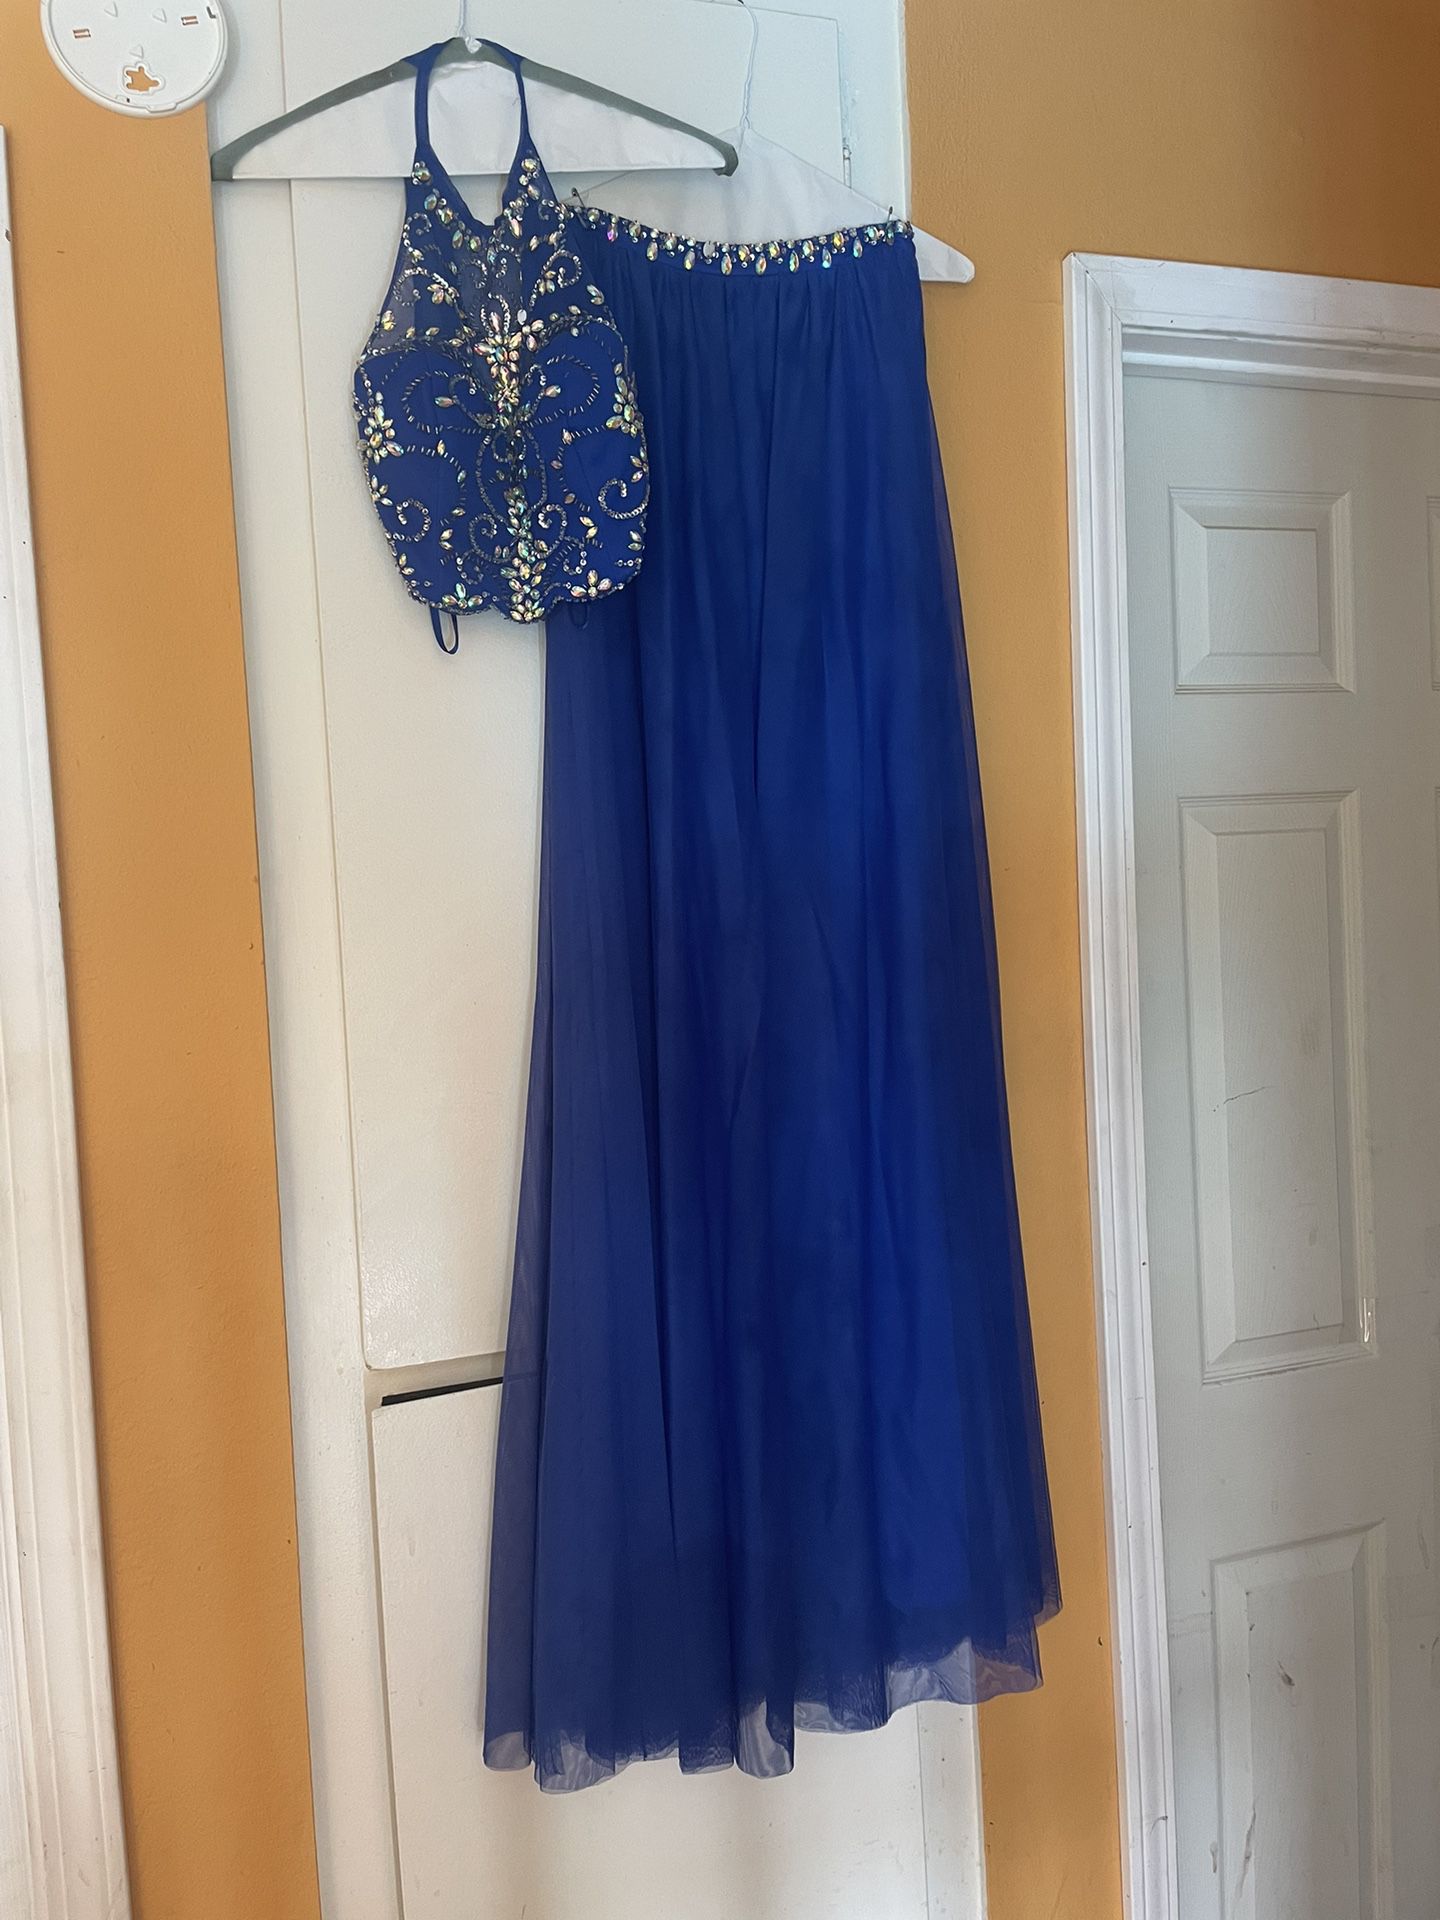 Windsor Prom Dress 2 pieces